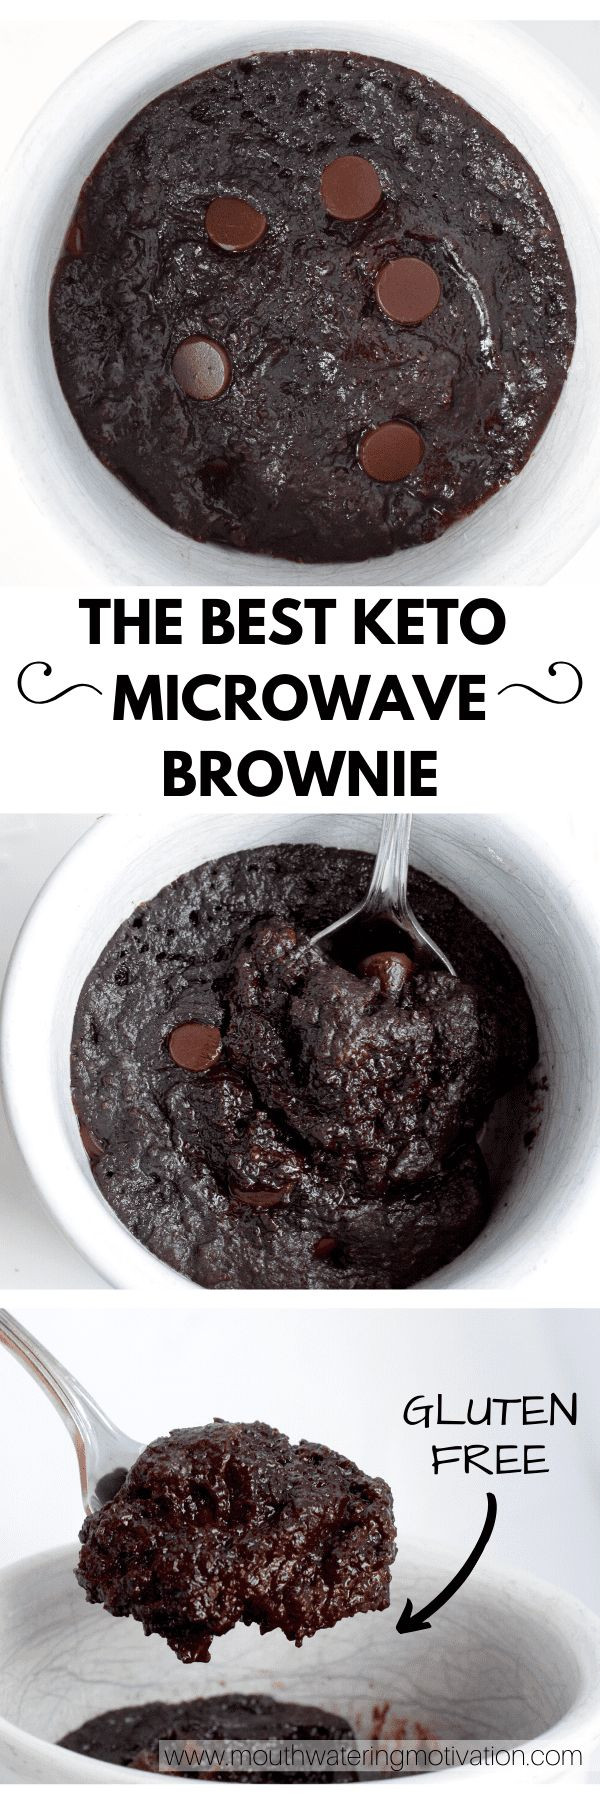 Best Microwave Desserts
 The Best Keto 1 Minute Microwave Brownie